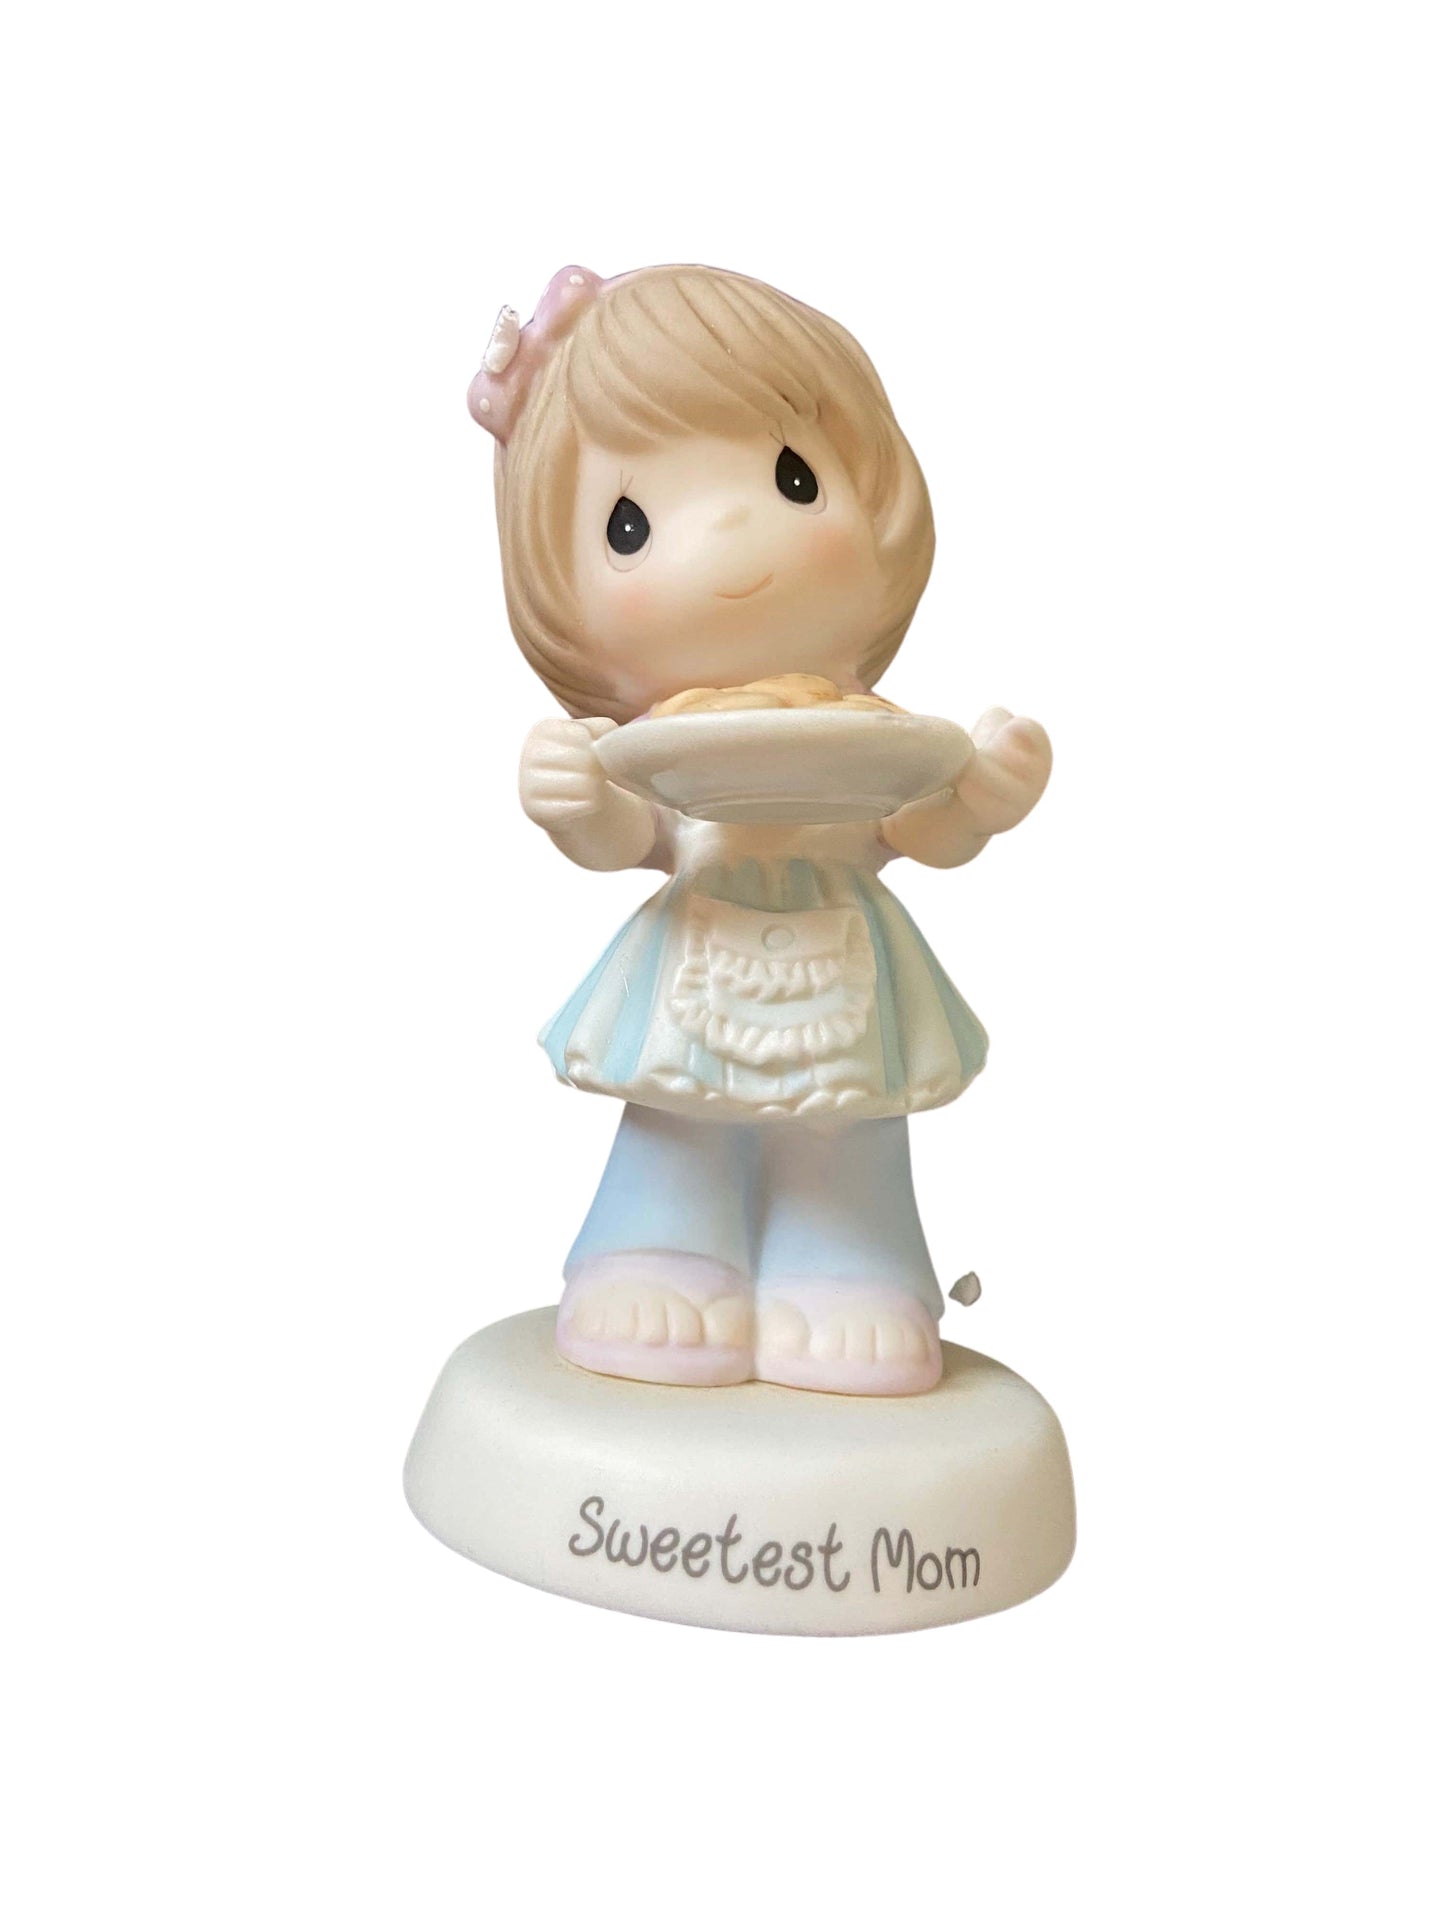 VEEP: Gary's Precious Moments "Sweetest Mom" Porcelain Figurine